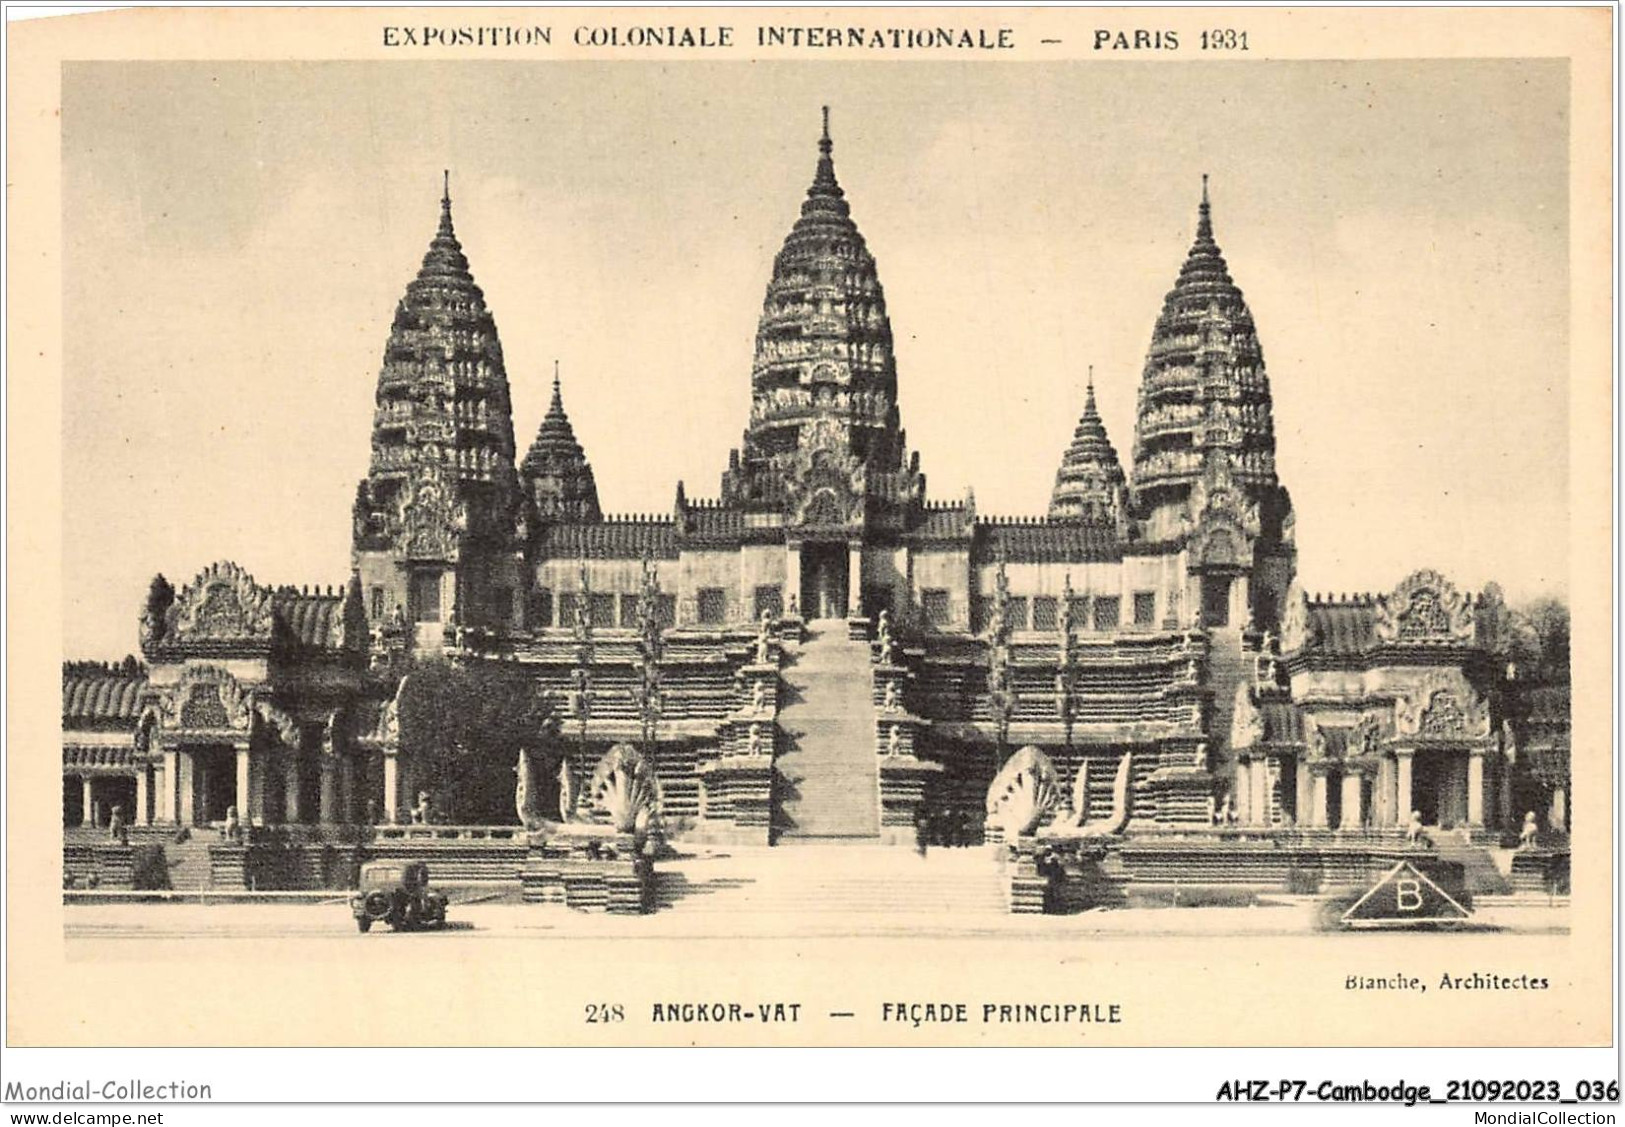 AHZP7-CAMBODGE-0614 - EXPOSITION COLONIALE INTERNATIONALE - PARIS 1931 - ANGKOR-VAT - FACADE PRINCIPALE - Kambodscha